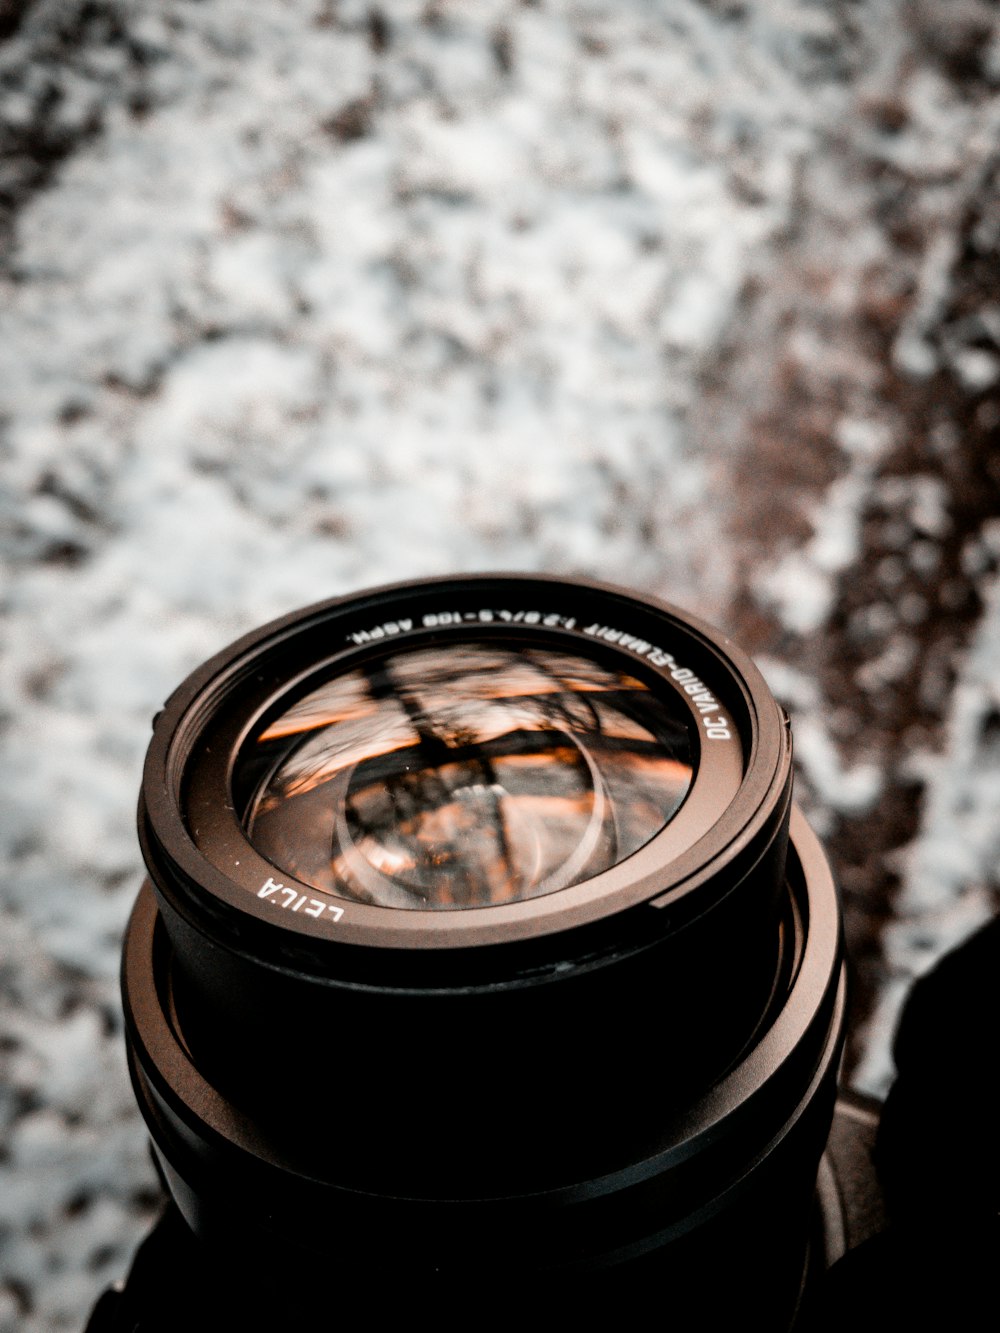 a close up of a camera lens on a tripod